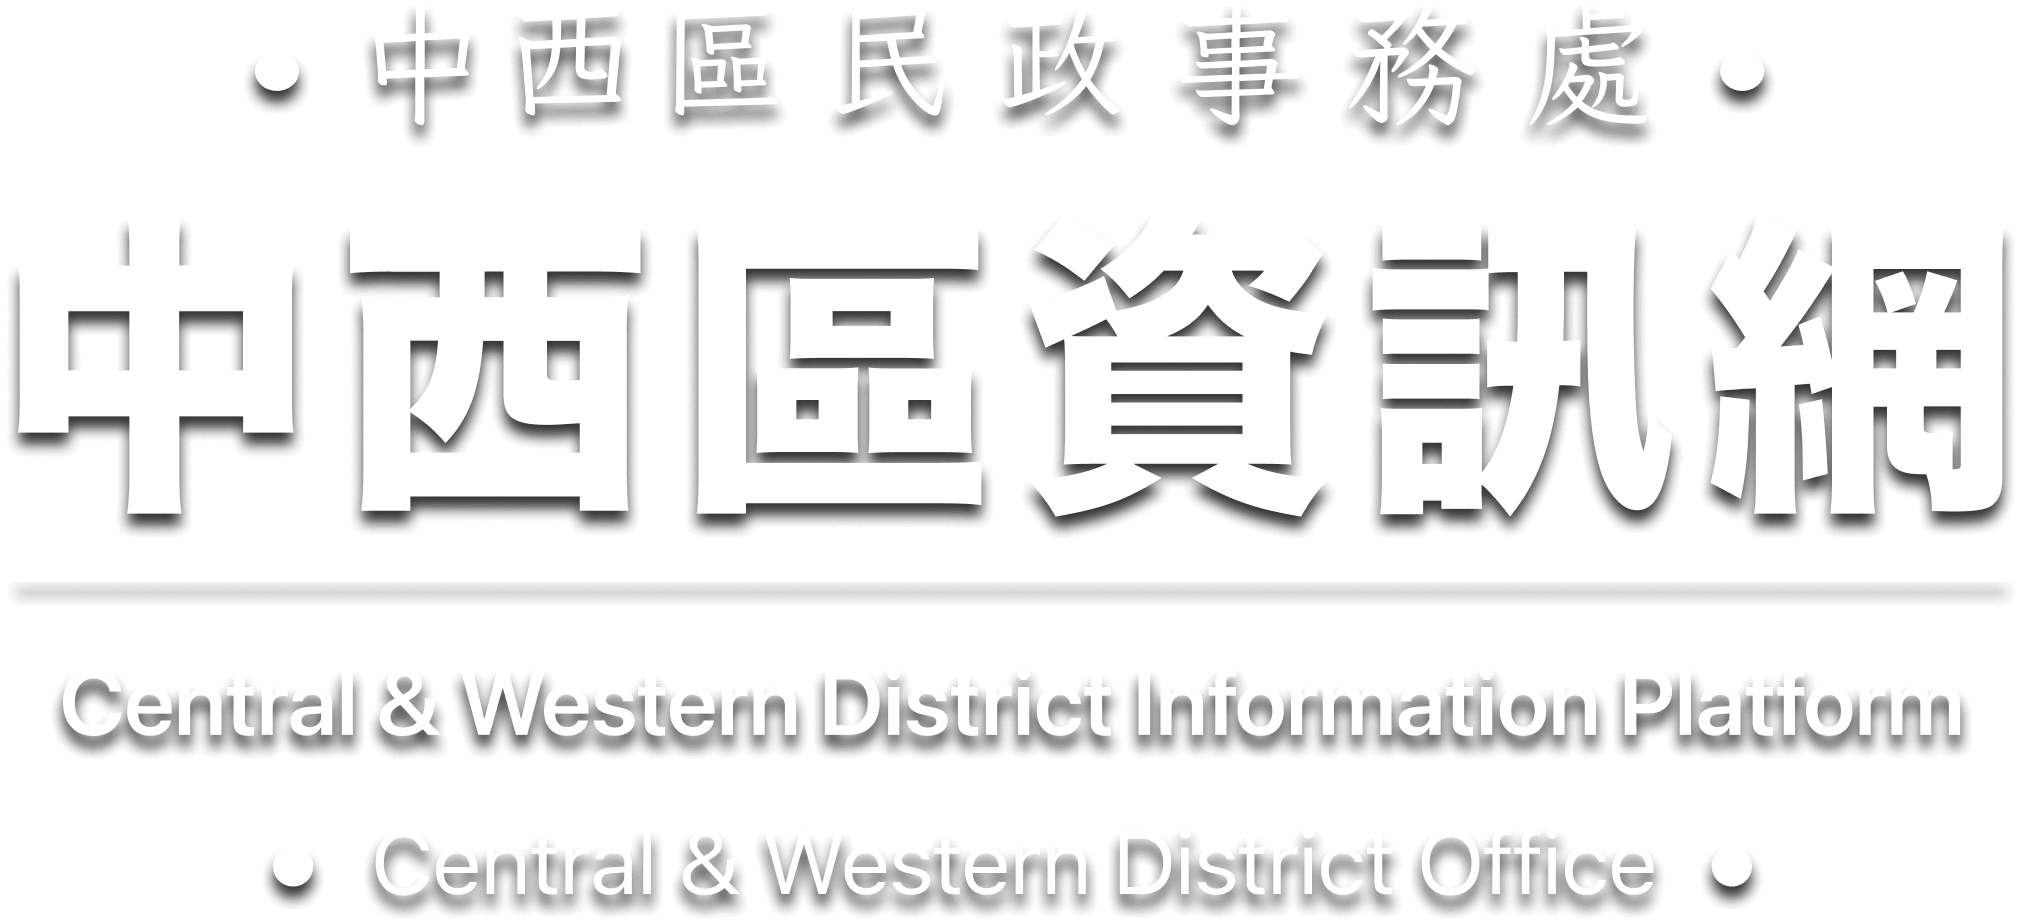 Central & Western District Information Platform